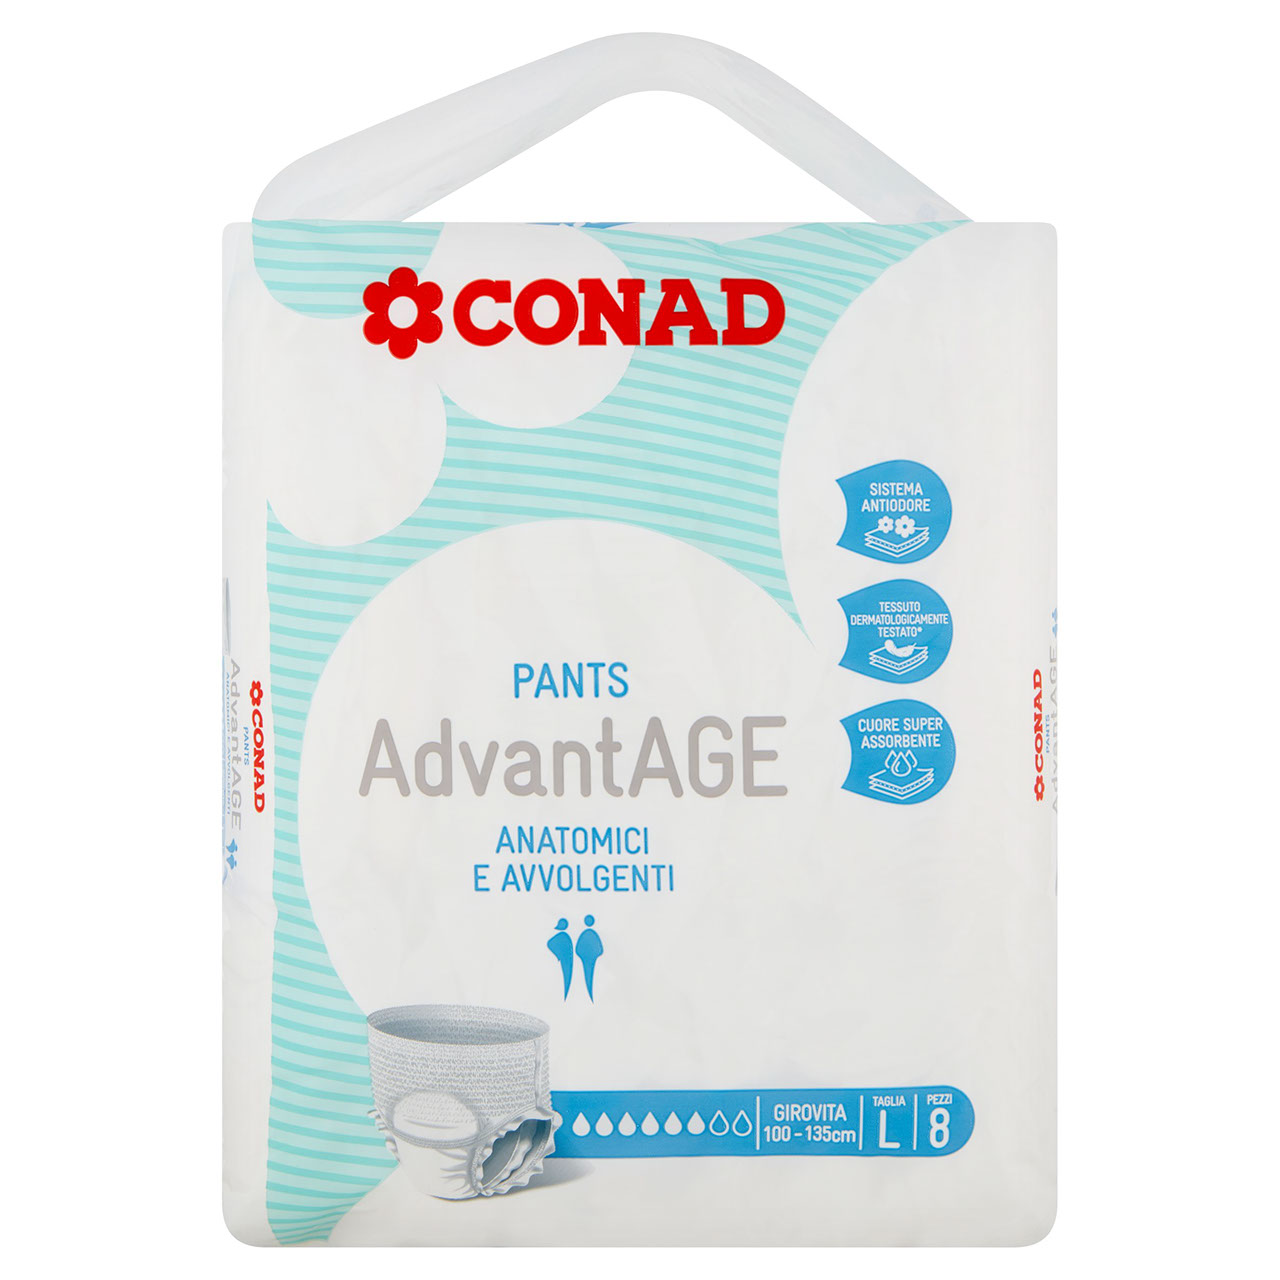 Advantage Pants Anatomici Taglia L 8 pz Conad